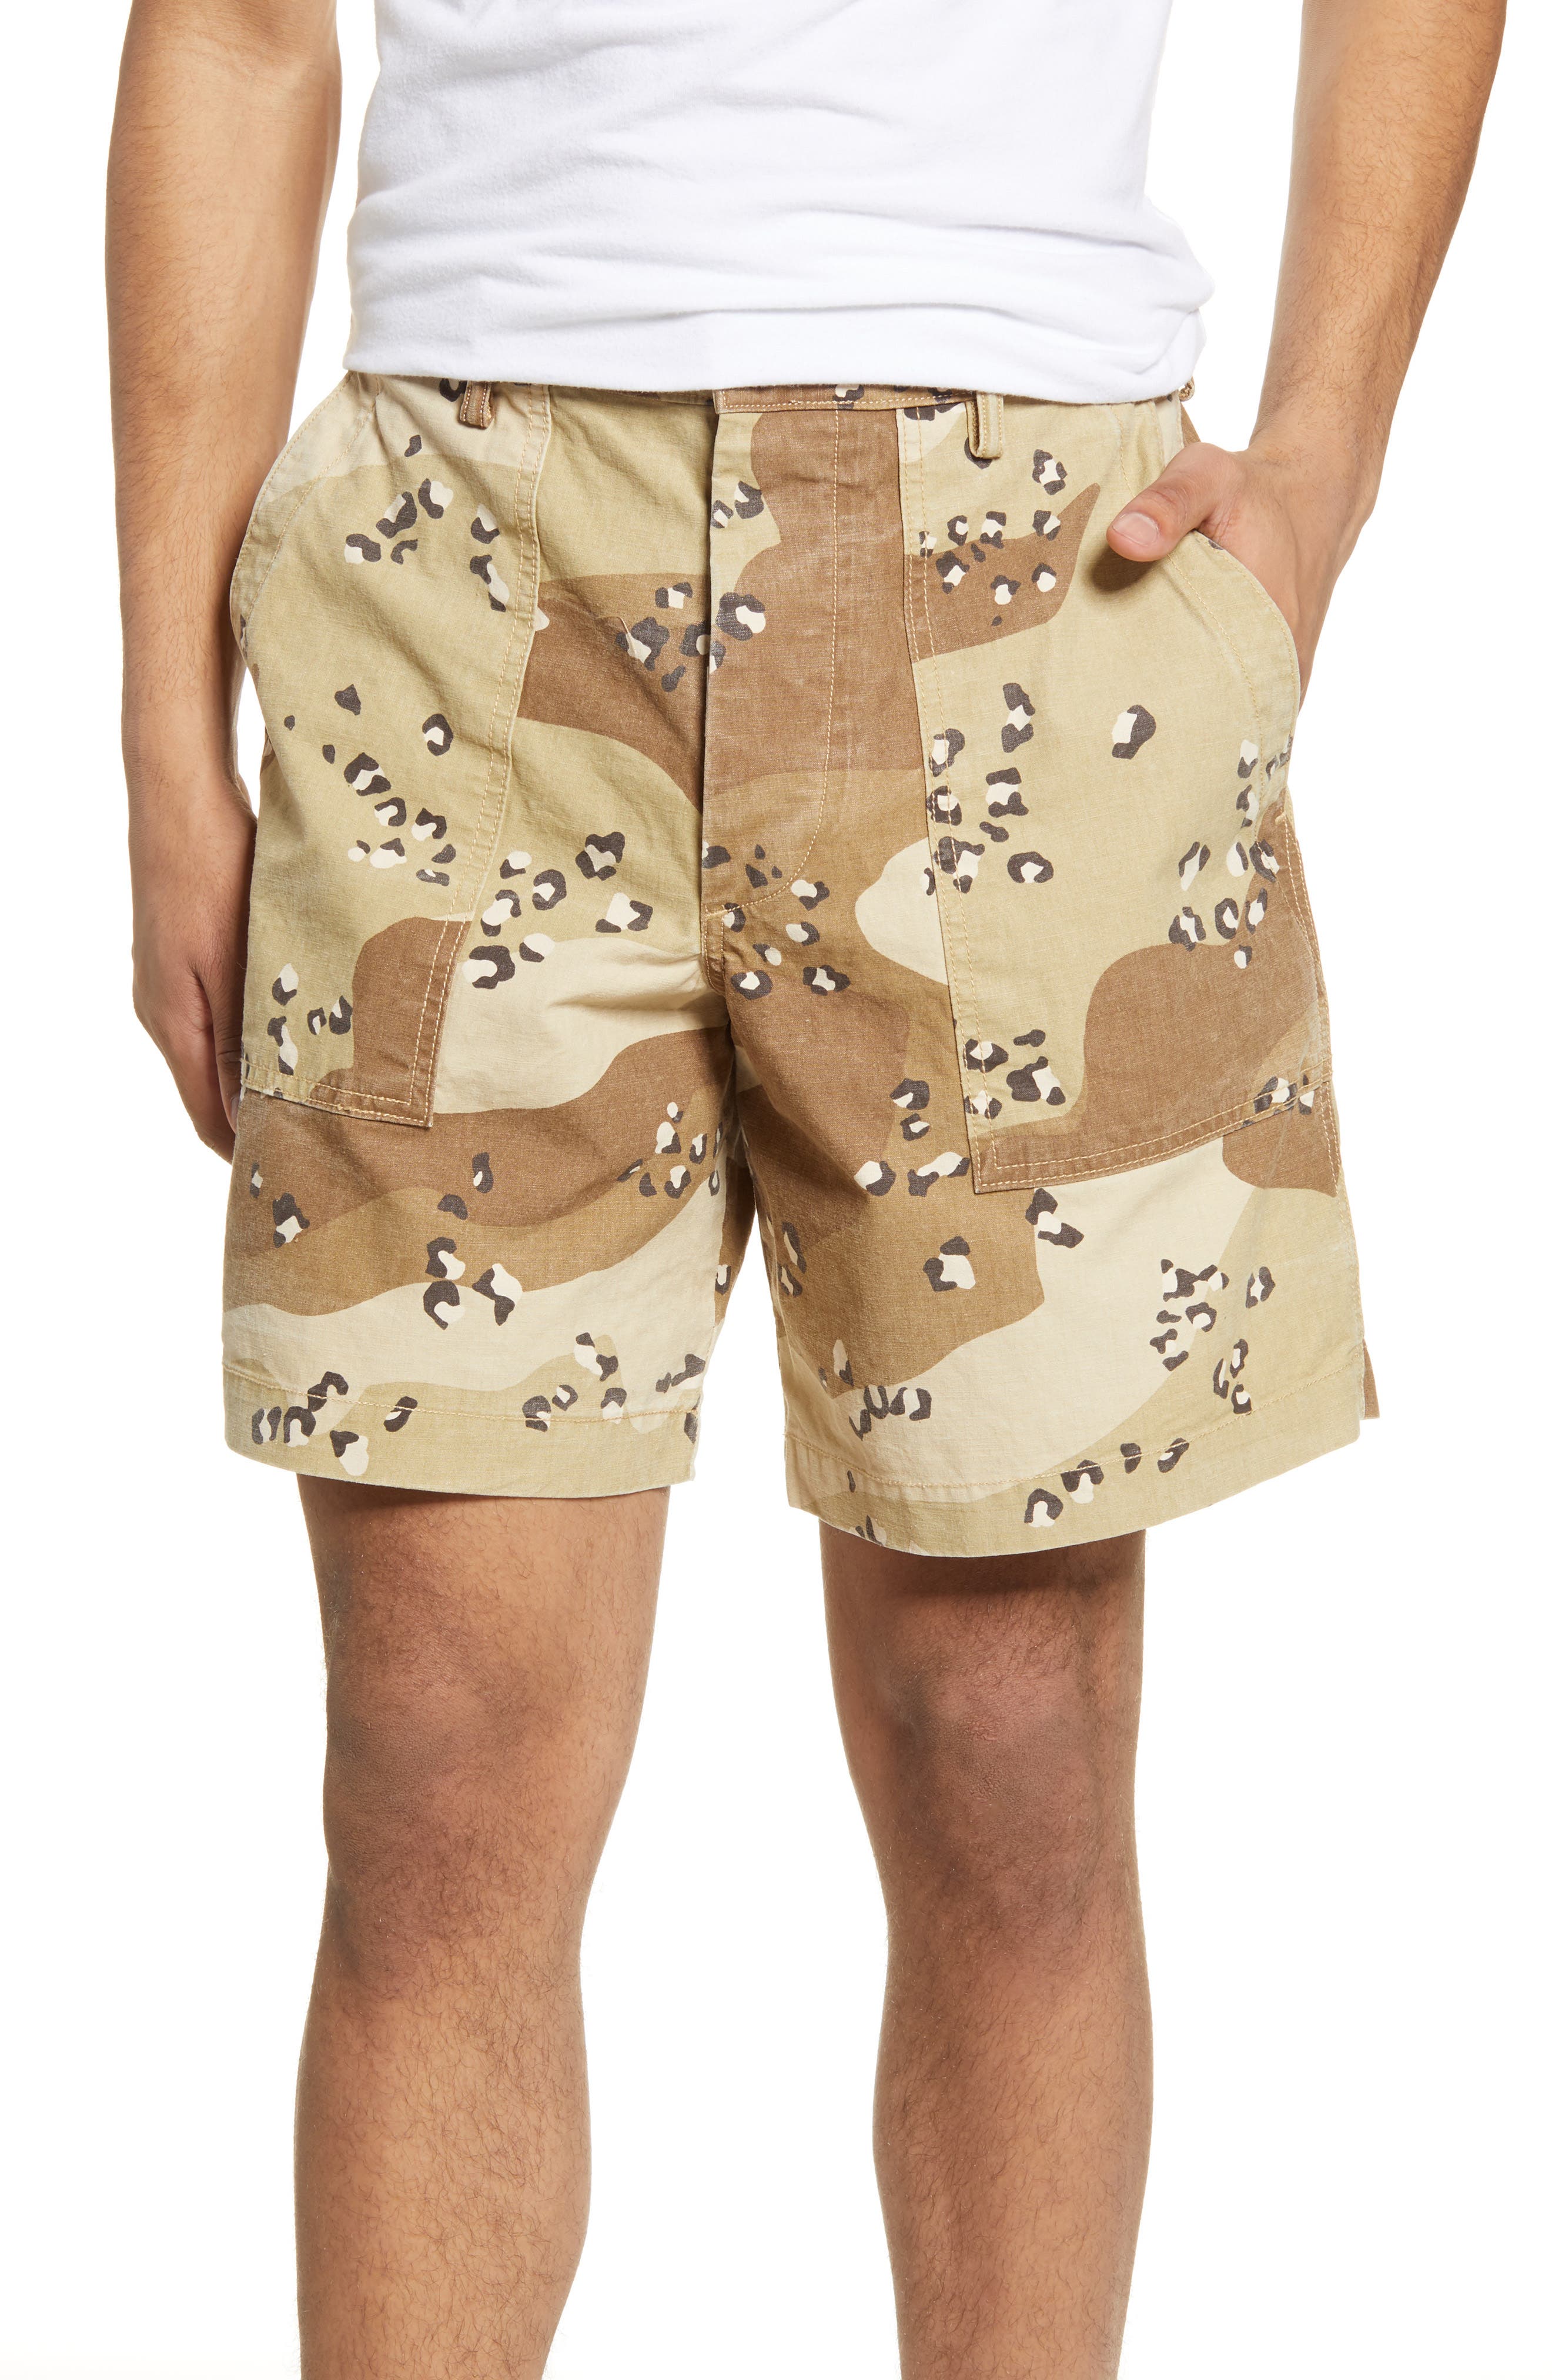 ralph lauren camo shorts